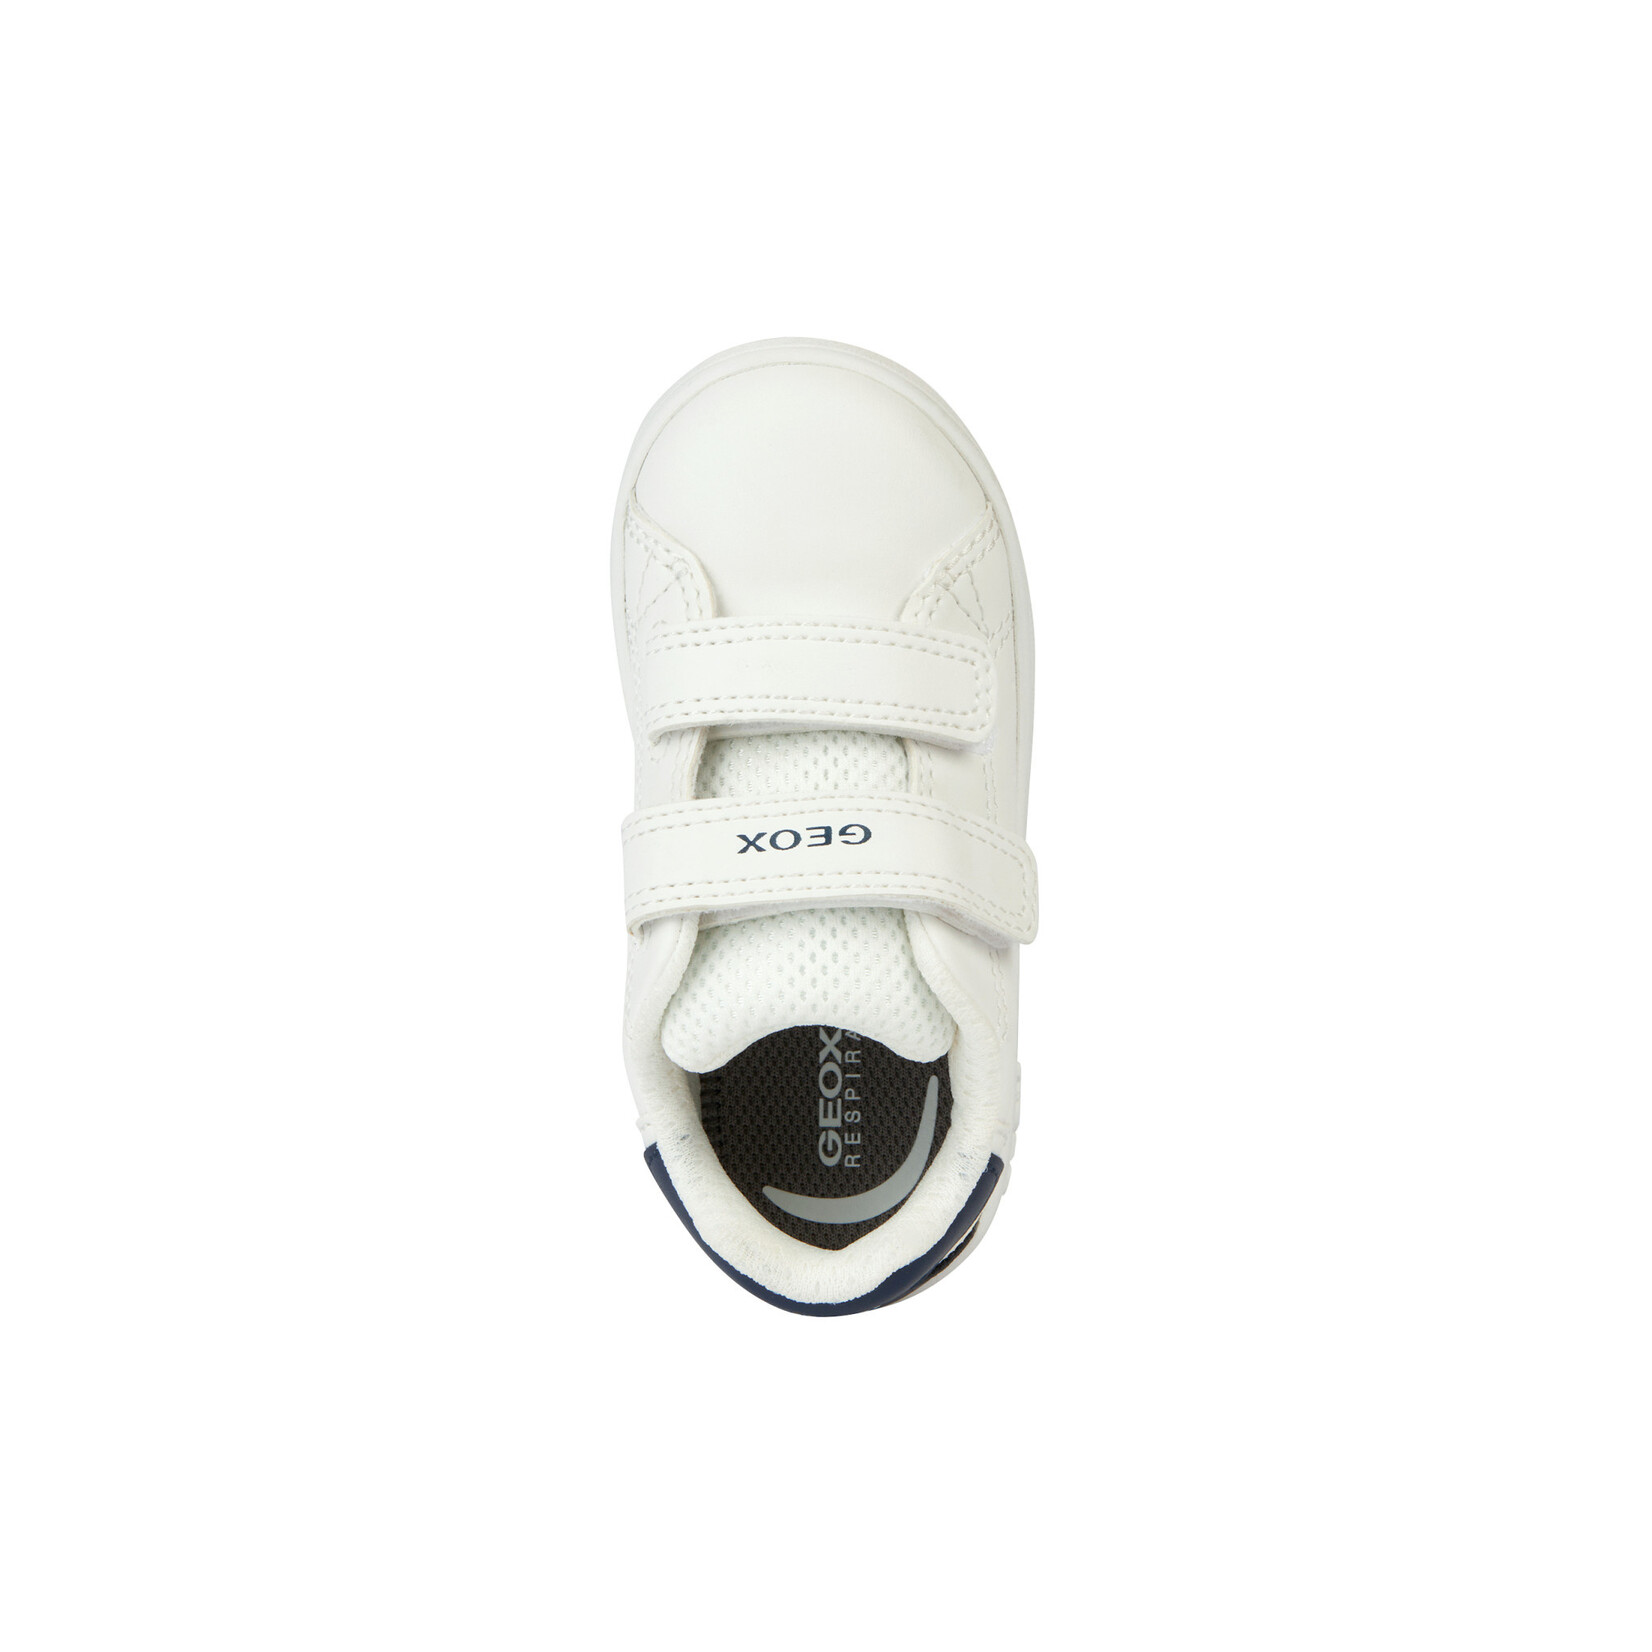 Geox GEOX - Chaussures de cuir synthétique 'B. ECLYPER' - Blanc/Marine